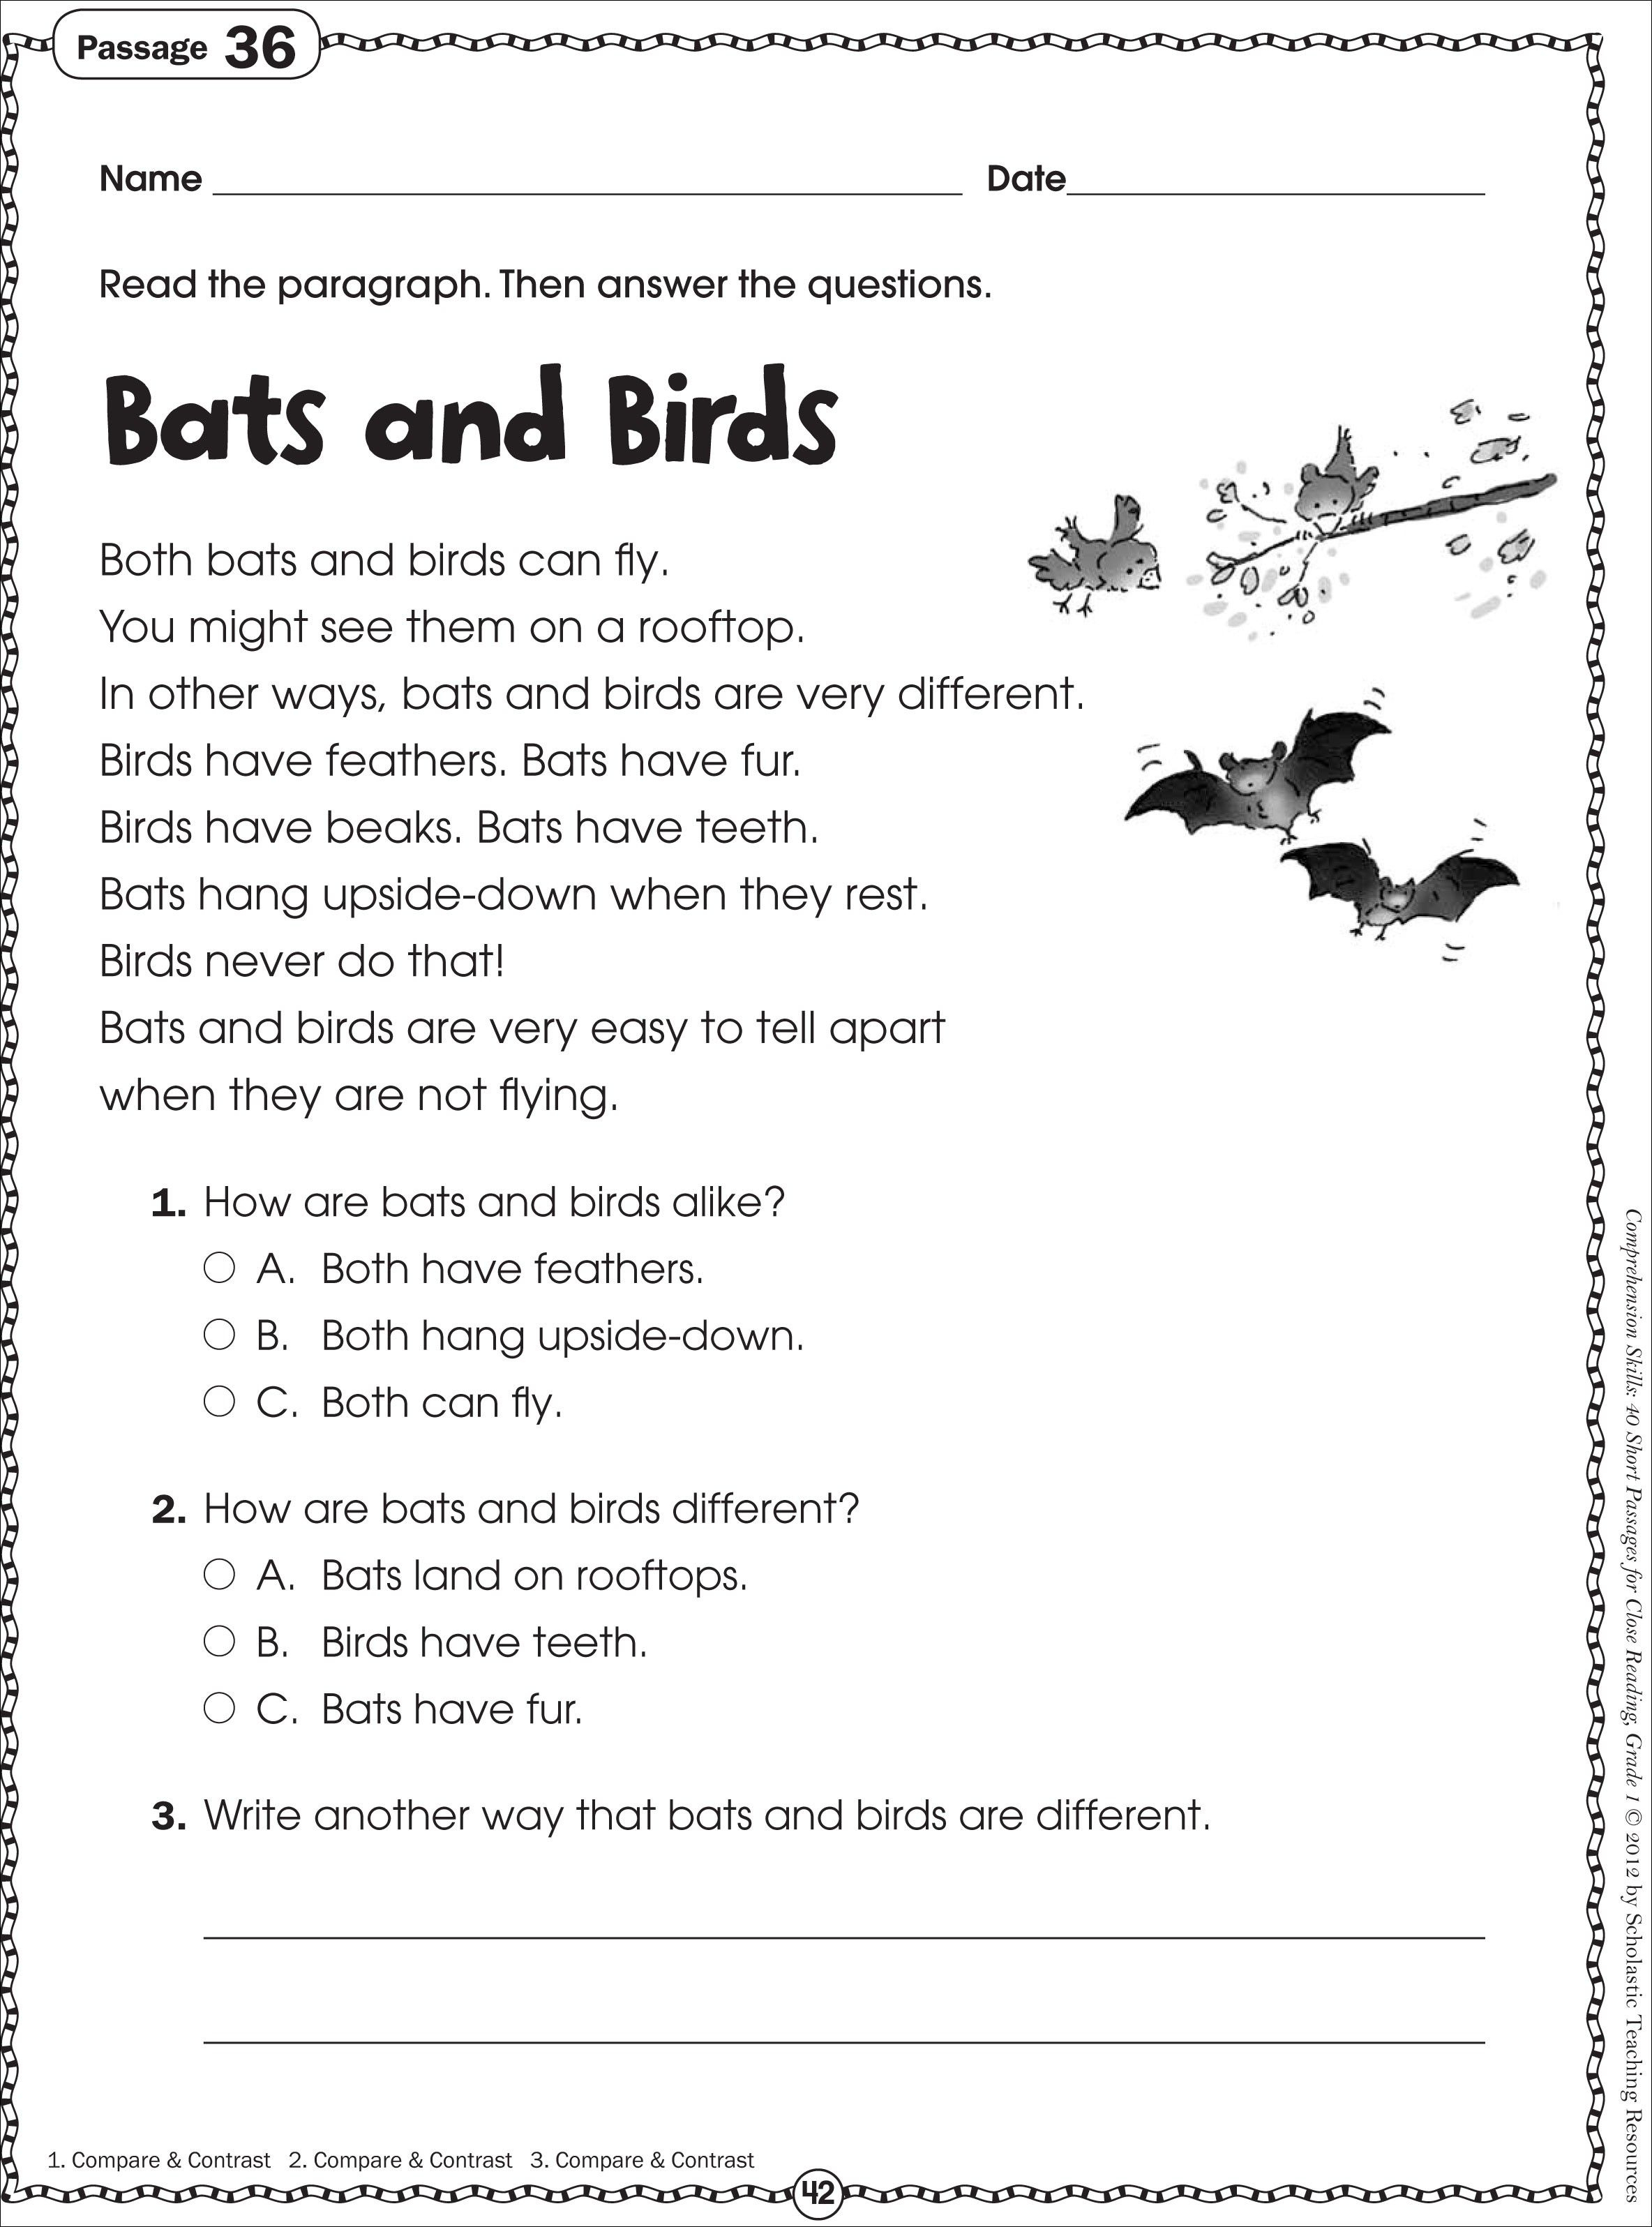 Free Printable Reading Comprehension Worksheets For Kindergarten | Free Printable Easter Reading Comprehension Worksheets